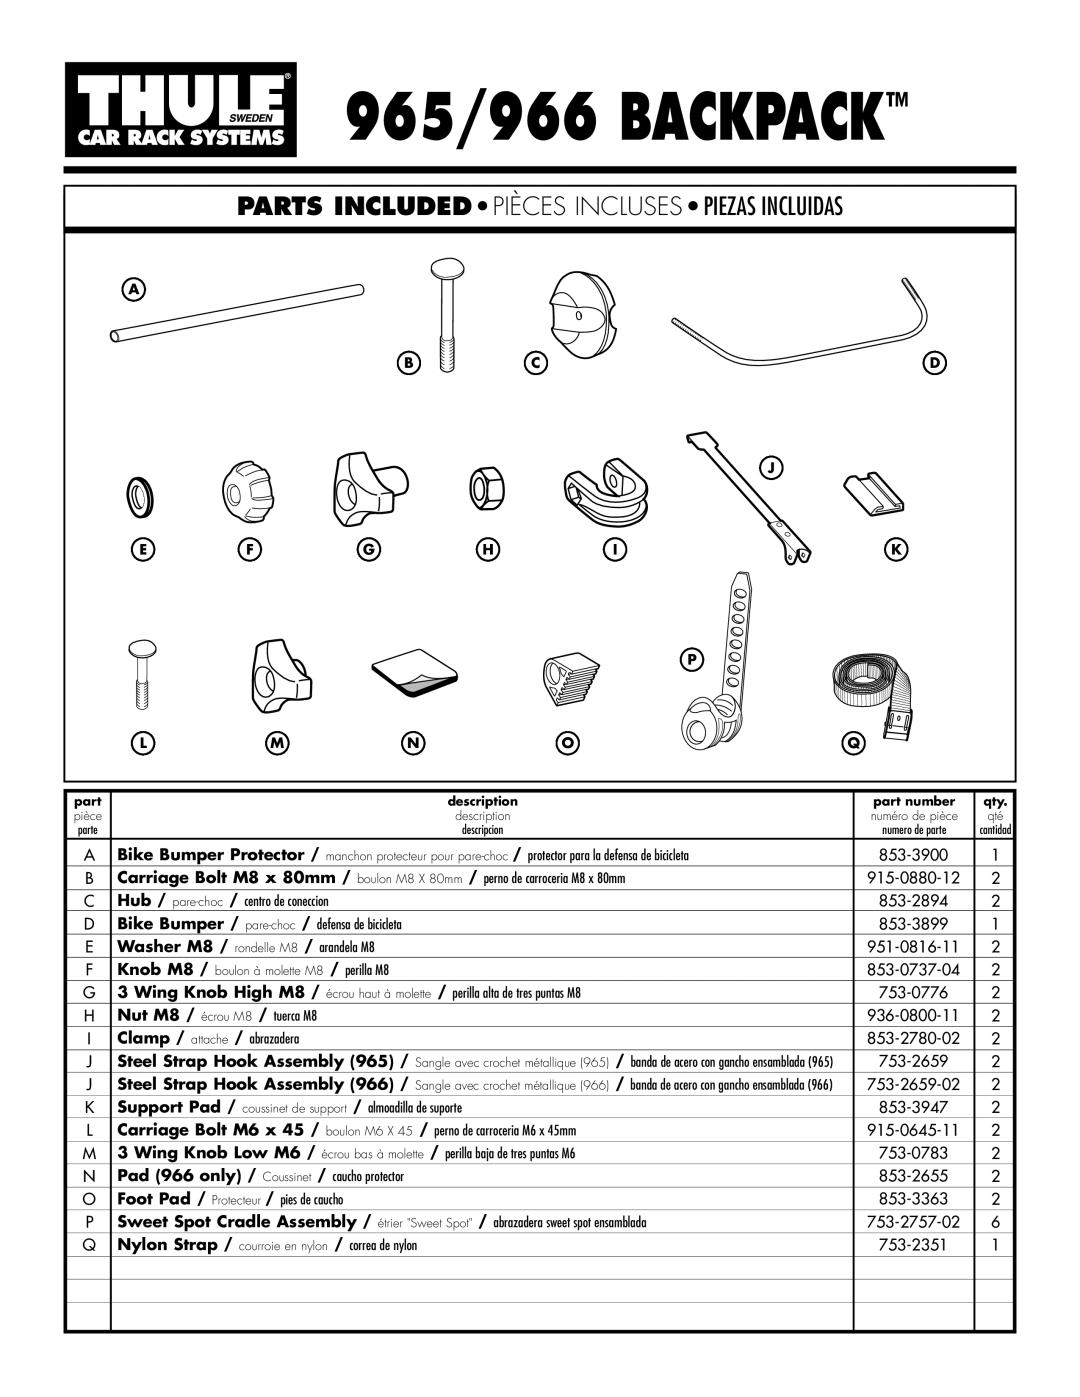 Thule manual 965/966 BACKPACK, Parts Includedpièces Inclusespiezas Incluidas, Washer M8 / rondelle M8 / arandela M8 